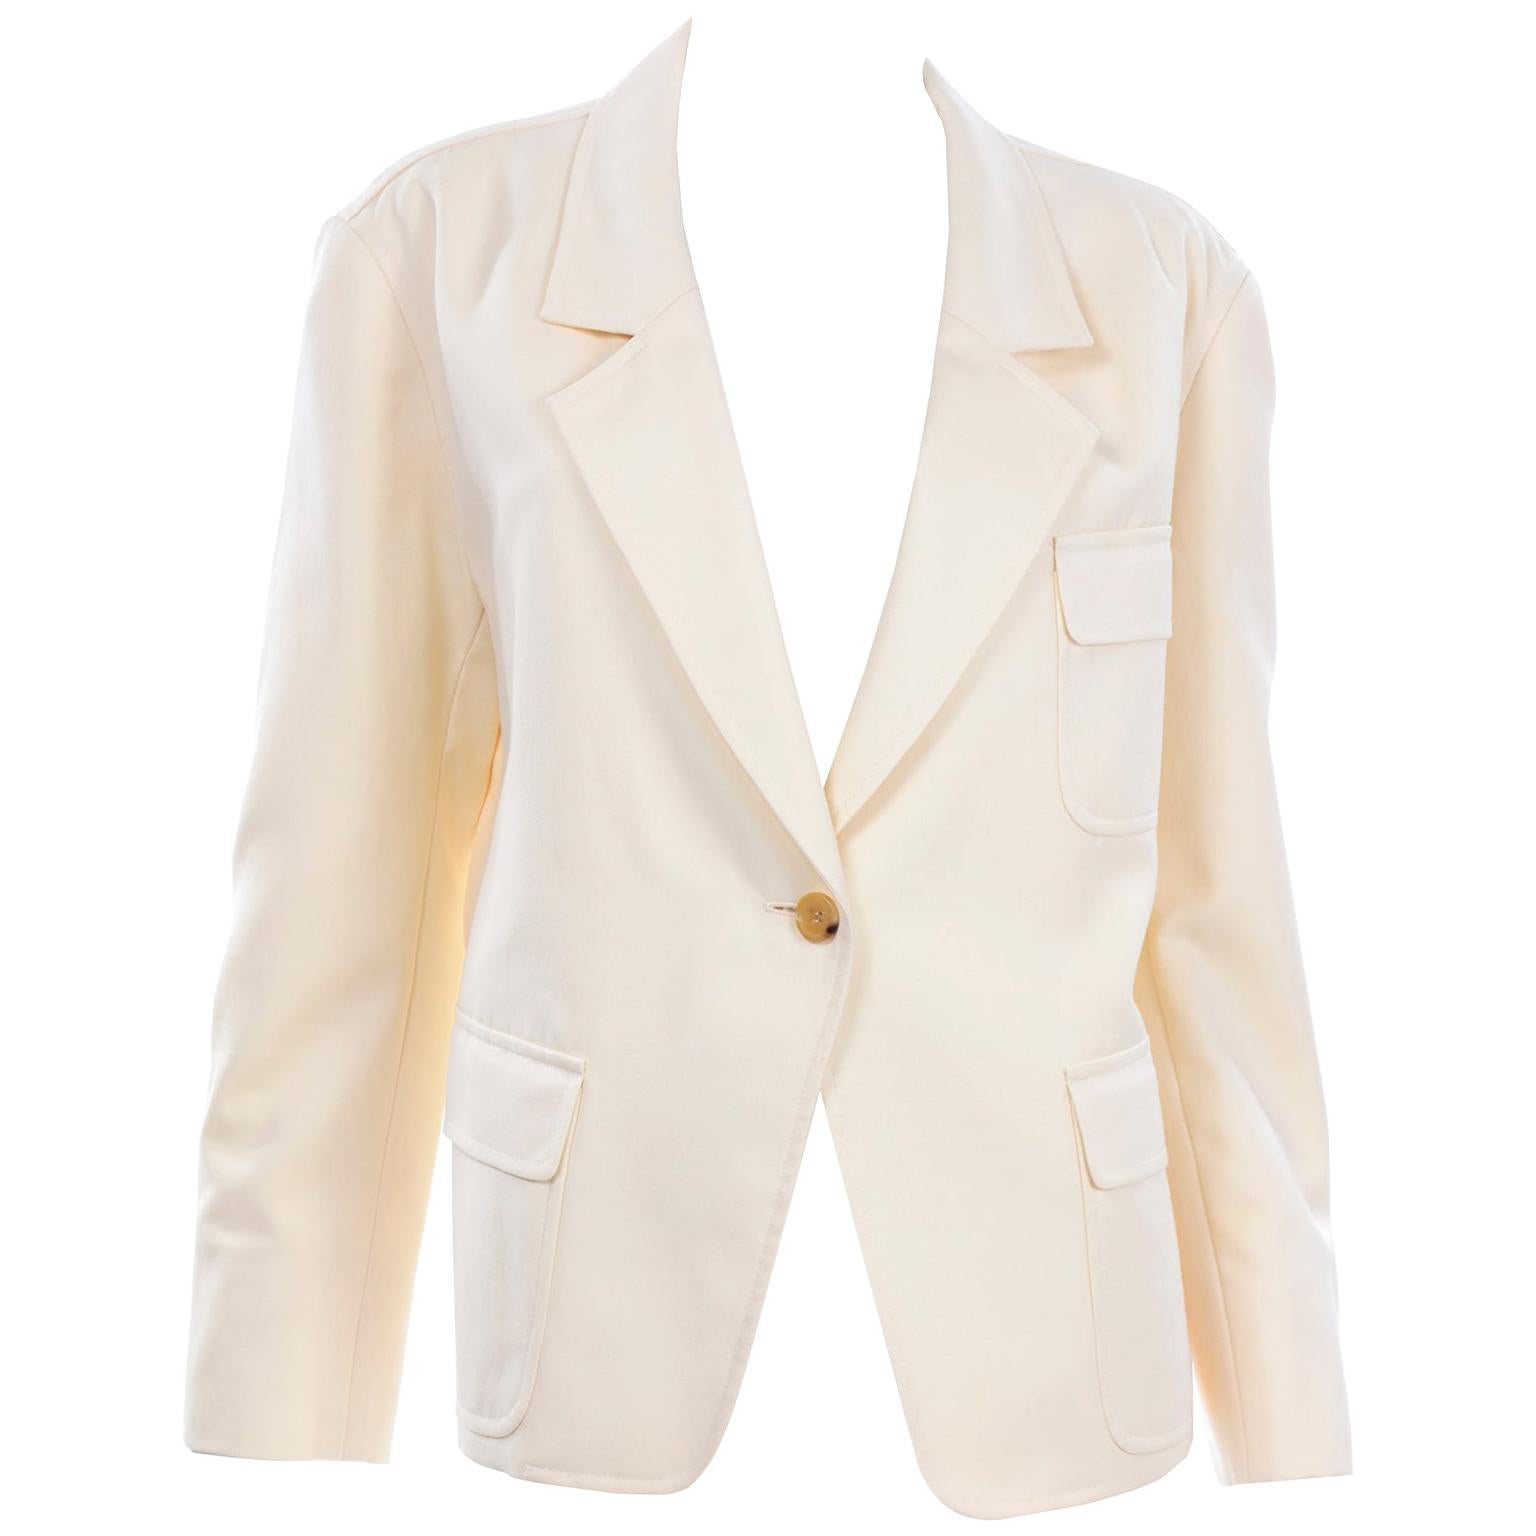 Isaac Mizrahi Vintage Cream Wool Boxy Blazer Jacket Size Large